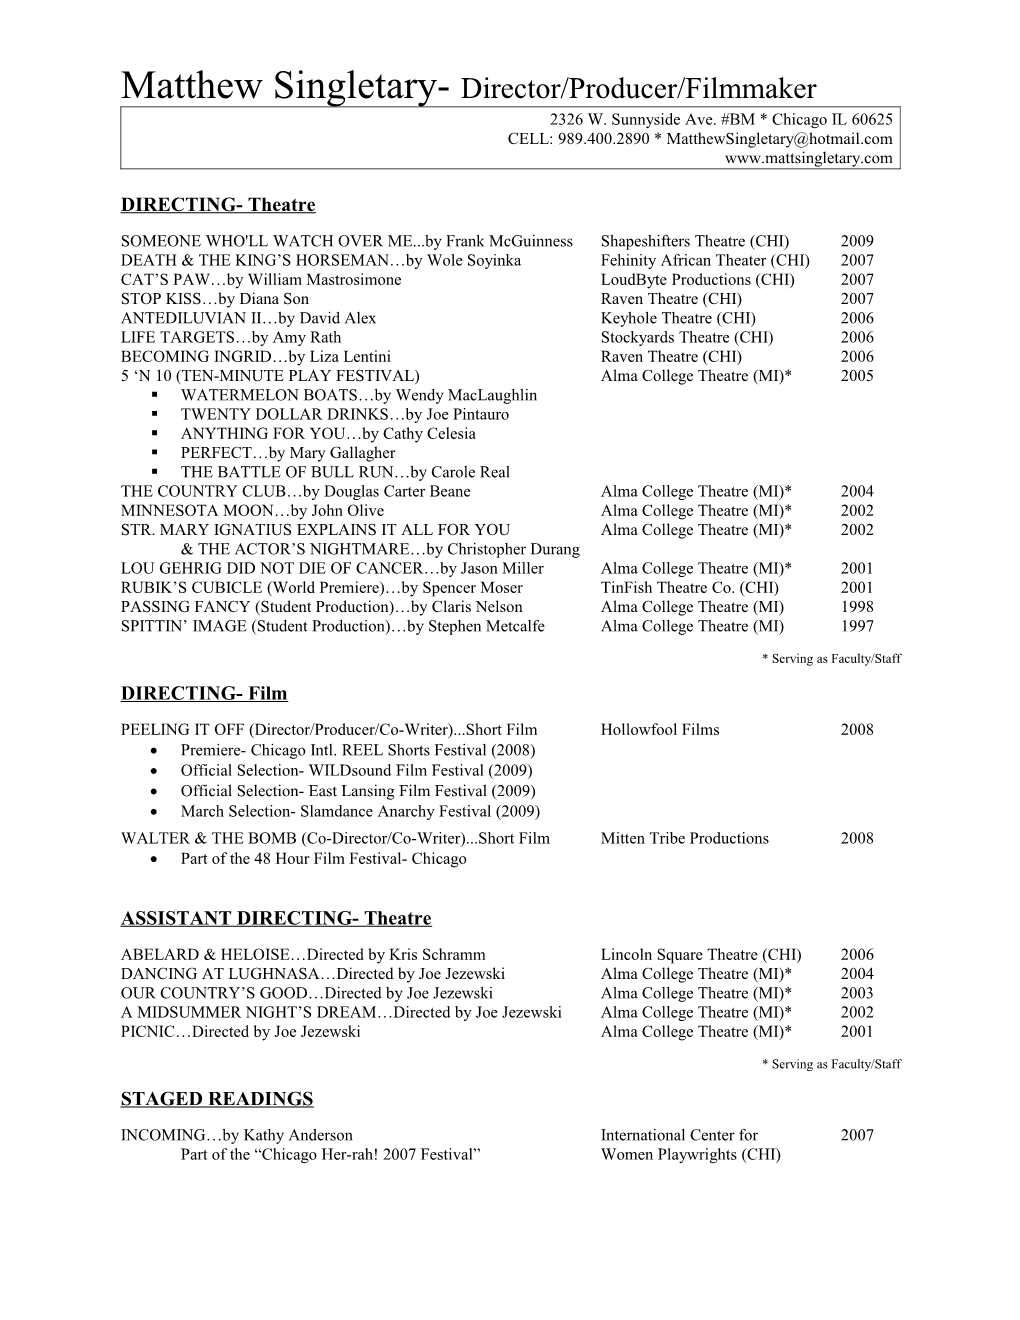 Resume of Matthew Singletary- Page 1